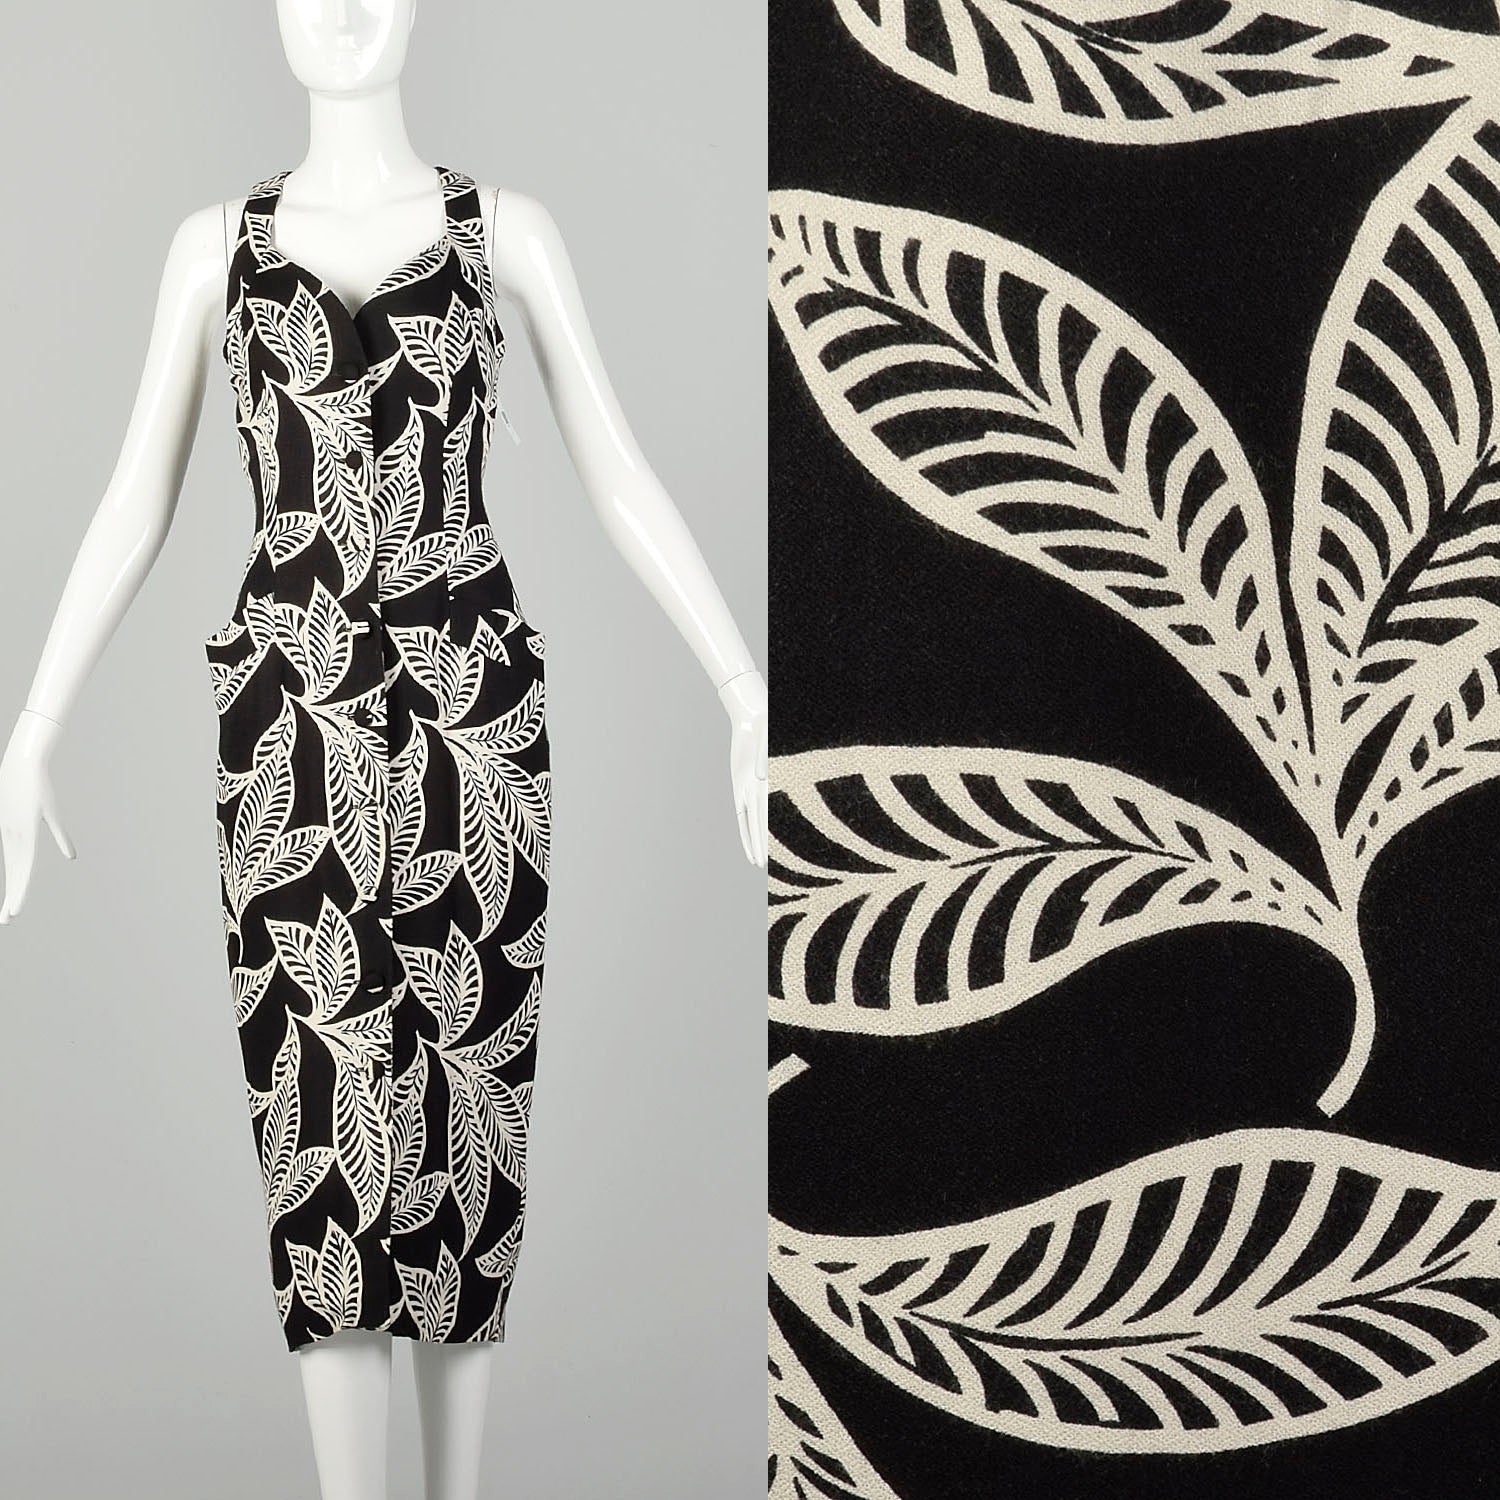 Medium 1990s Tropical Print Black Dress Casual Sleeveless